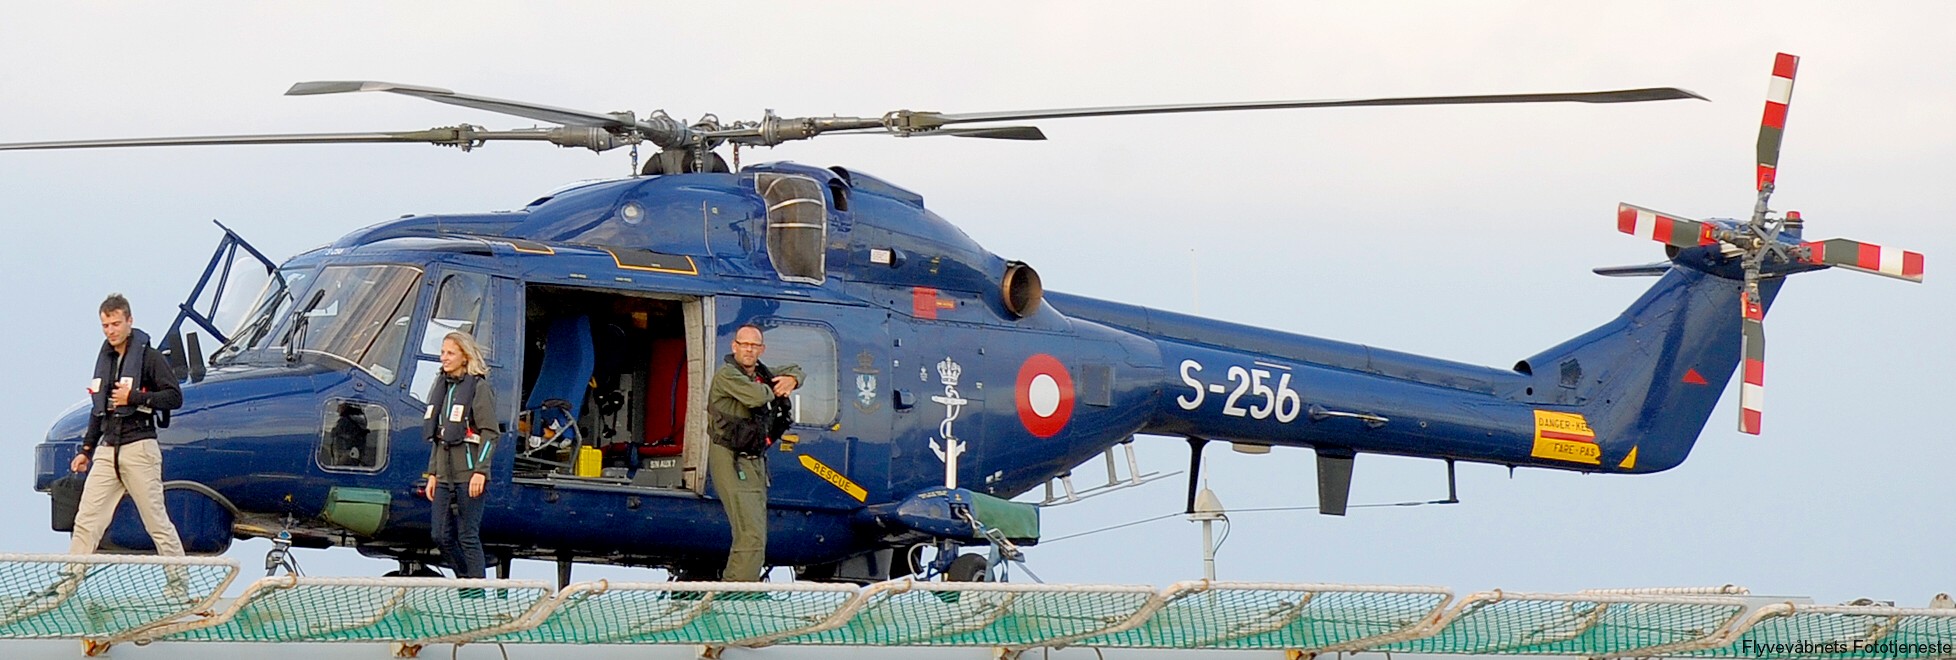 lynx mk.80 mk.90b helicopter westland royal danish navy air force kongelige danske marine flyvevabnet s-256 04